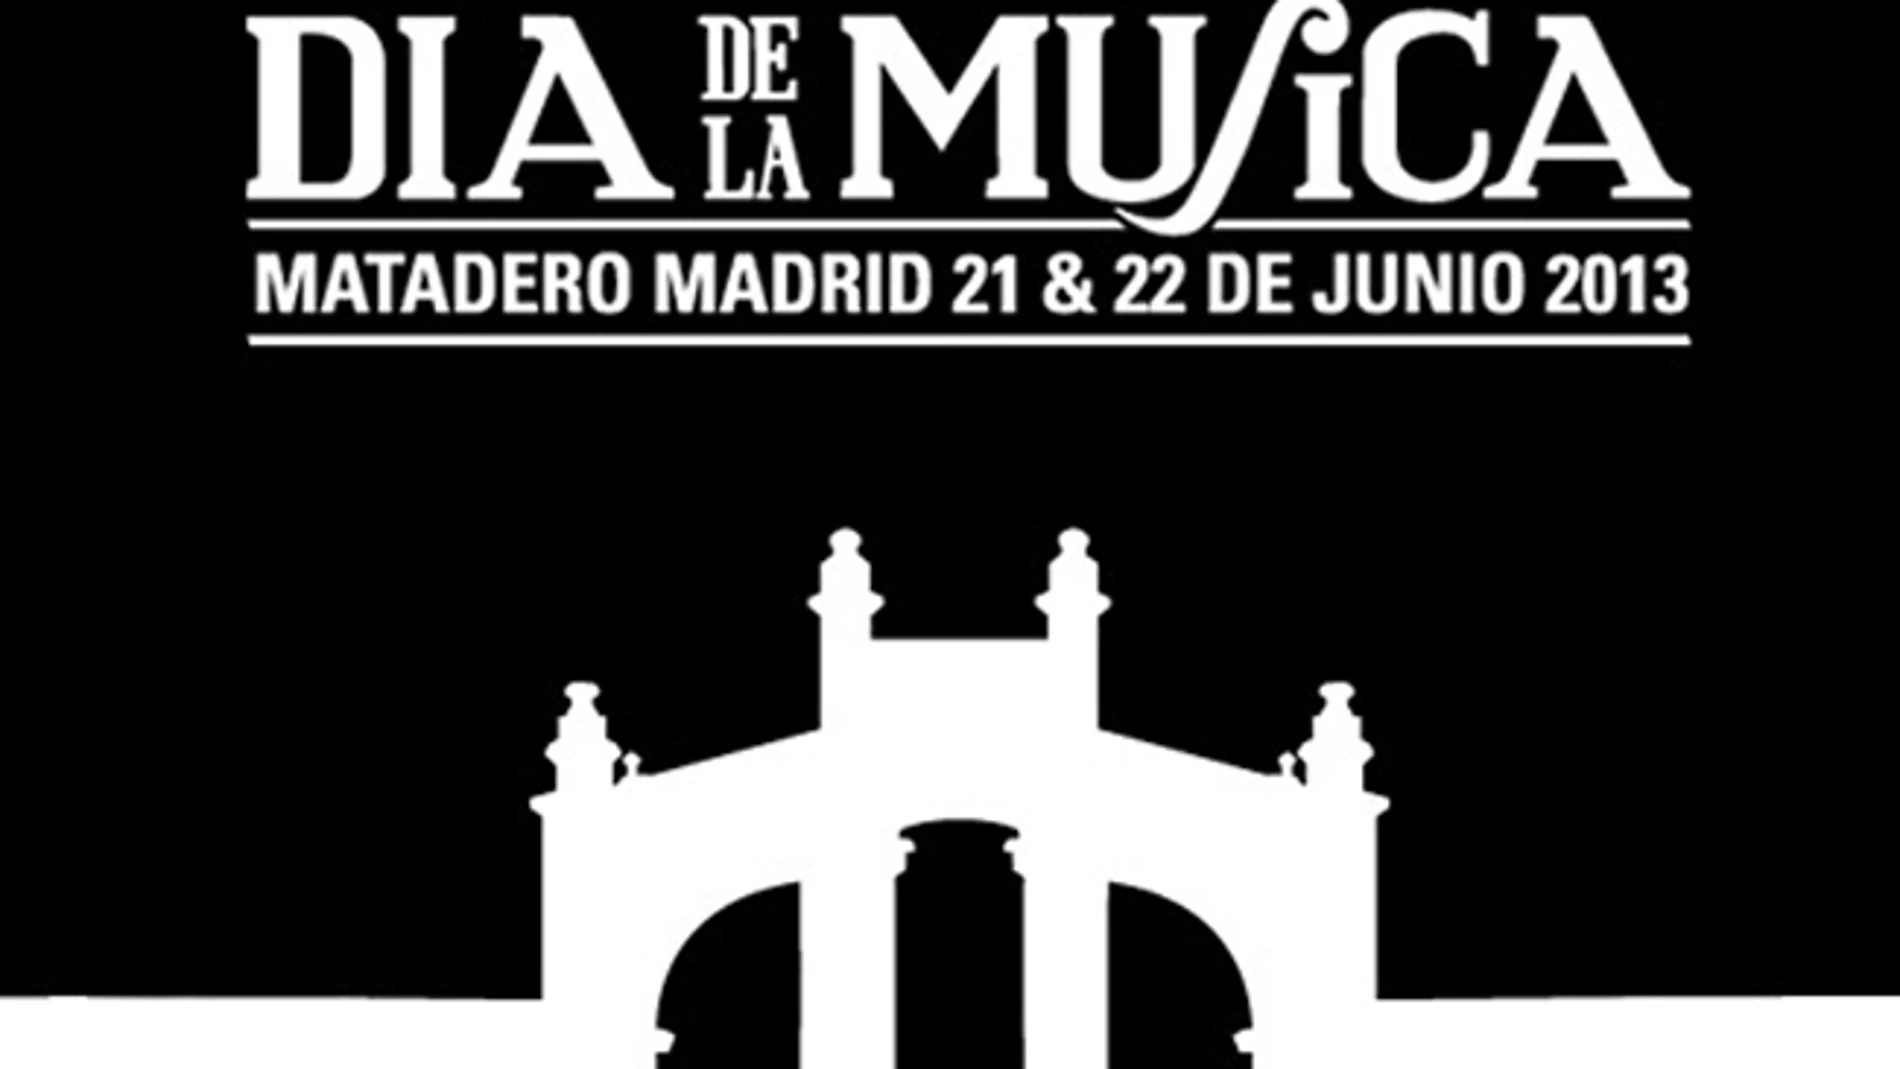 El Día de la Música regresa al Matadero de Madrid.